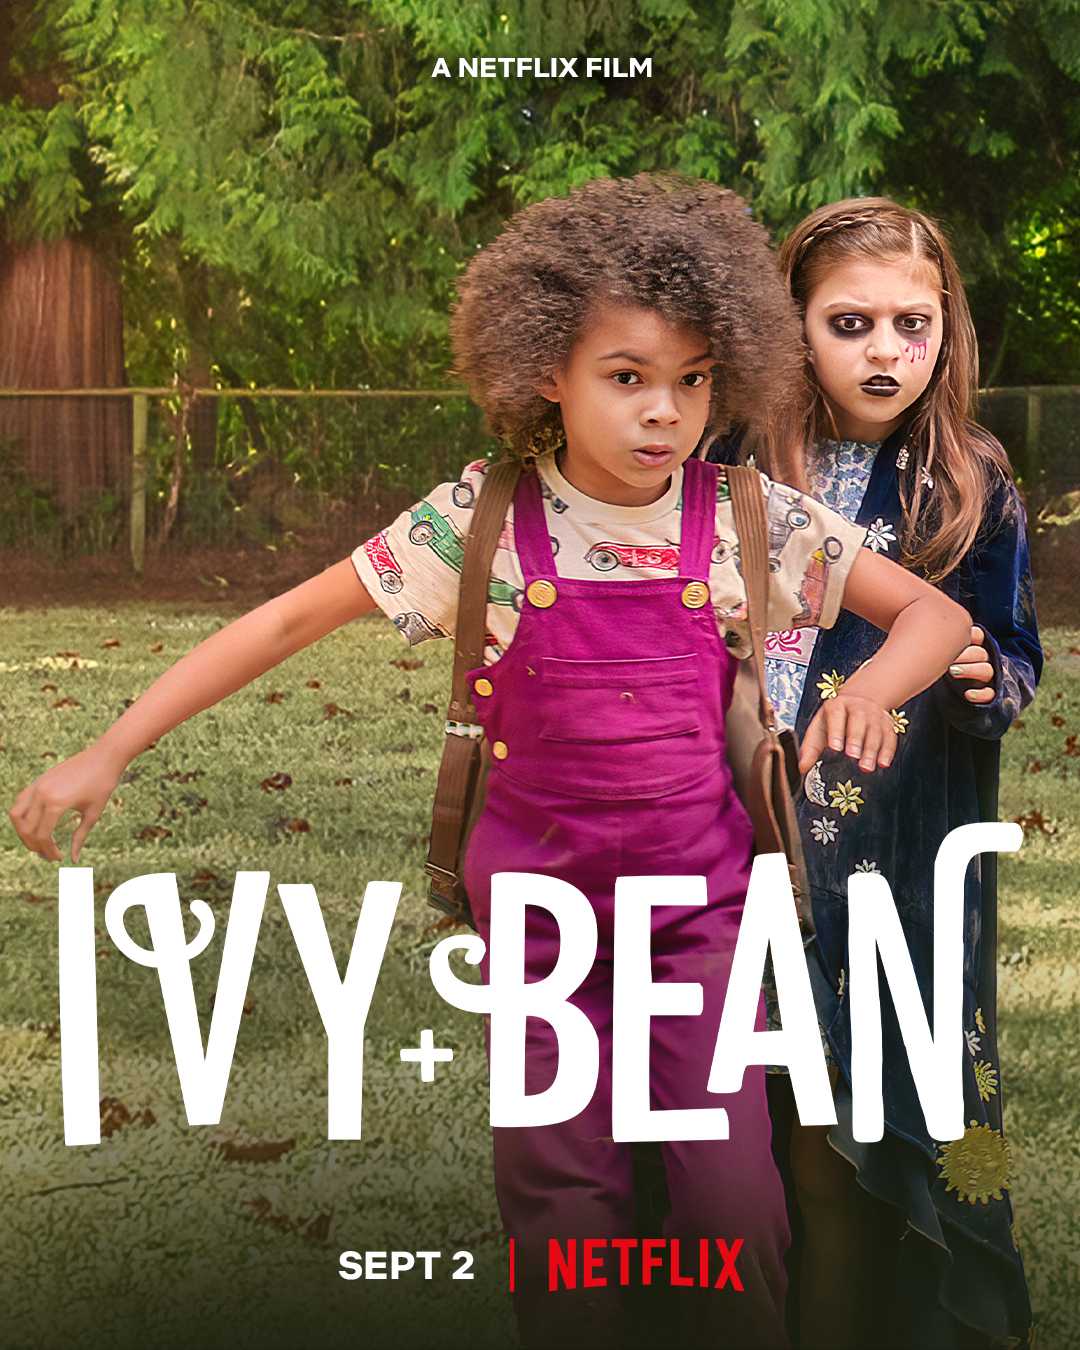 Ivy + bean - Ivy + bean